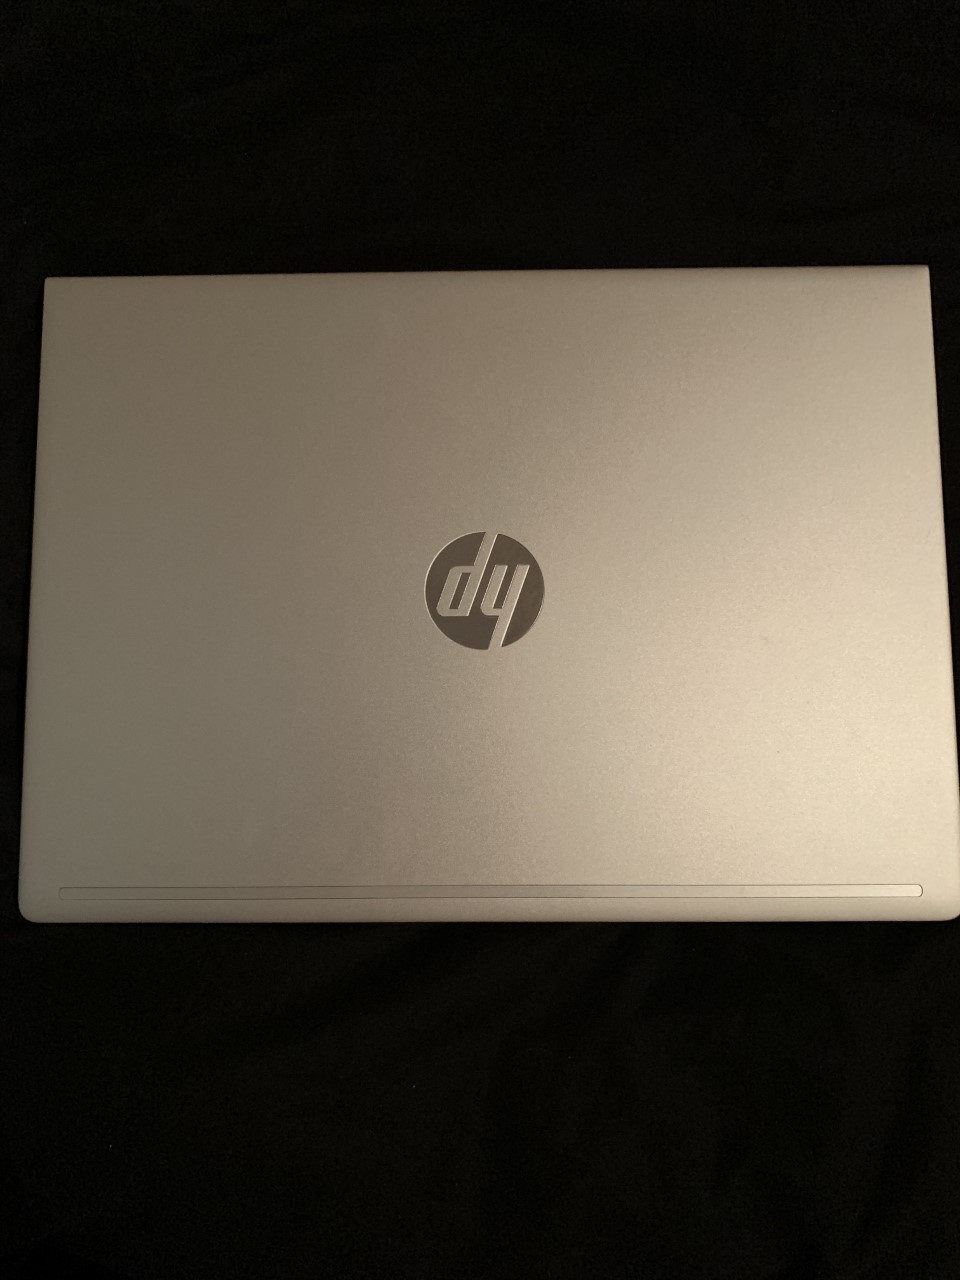 Neuer HP Laptop